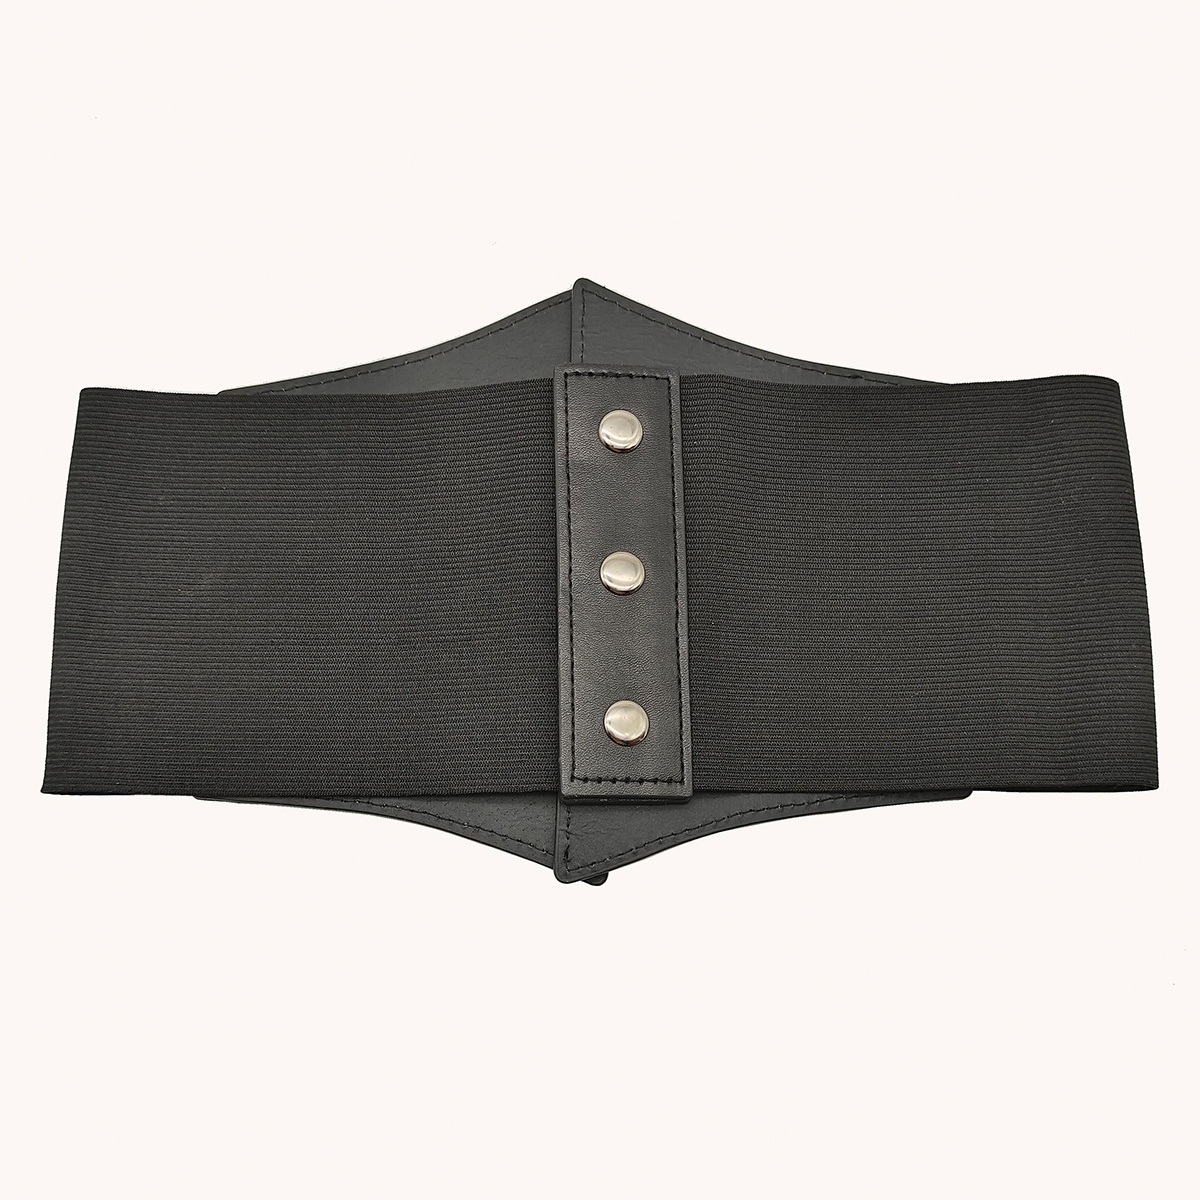 Vintage Lace Up Zipper Girdle Black PU Leather Elastic Wide Waistband  Classic Dress Coat Girdle Waspie Corset Belt For Women